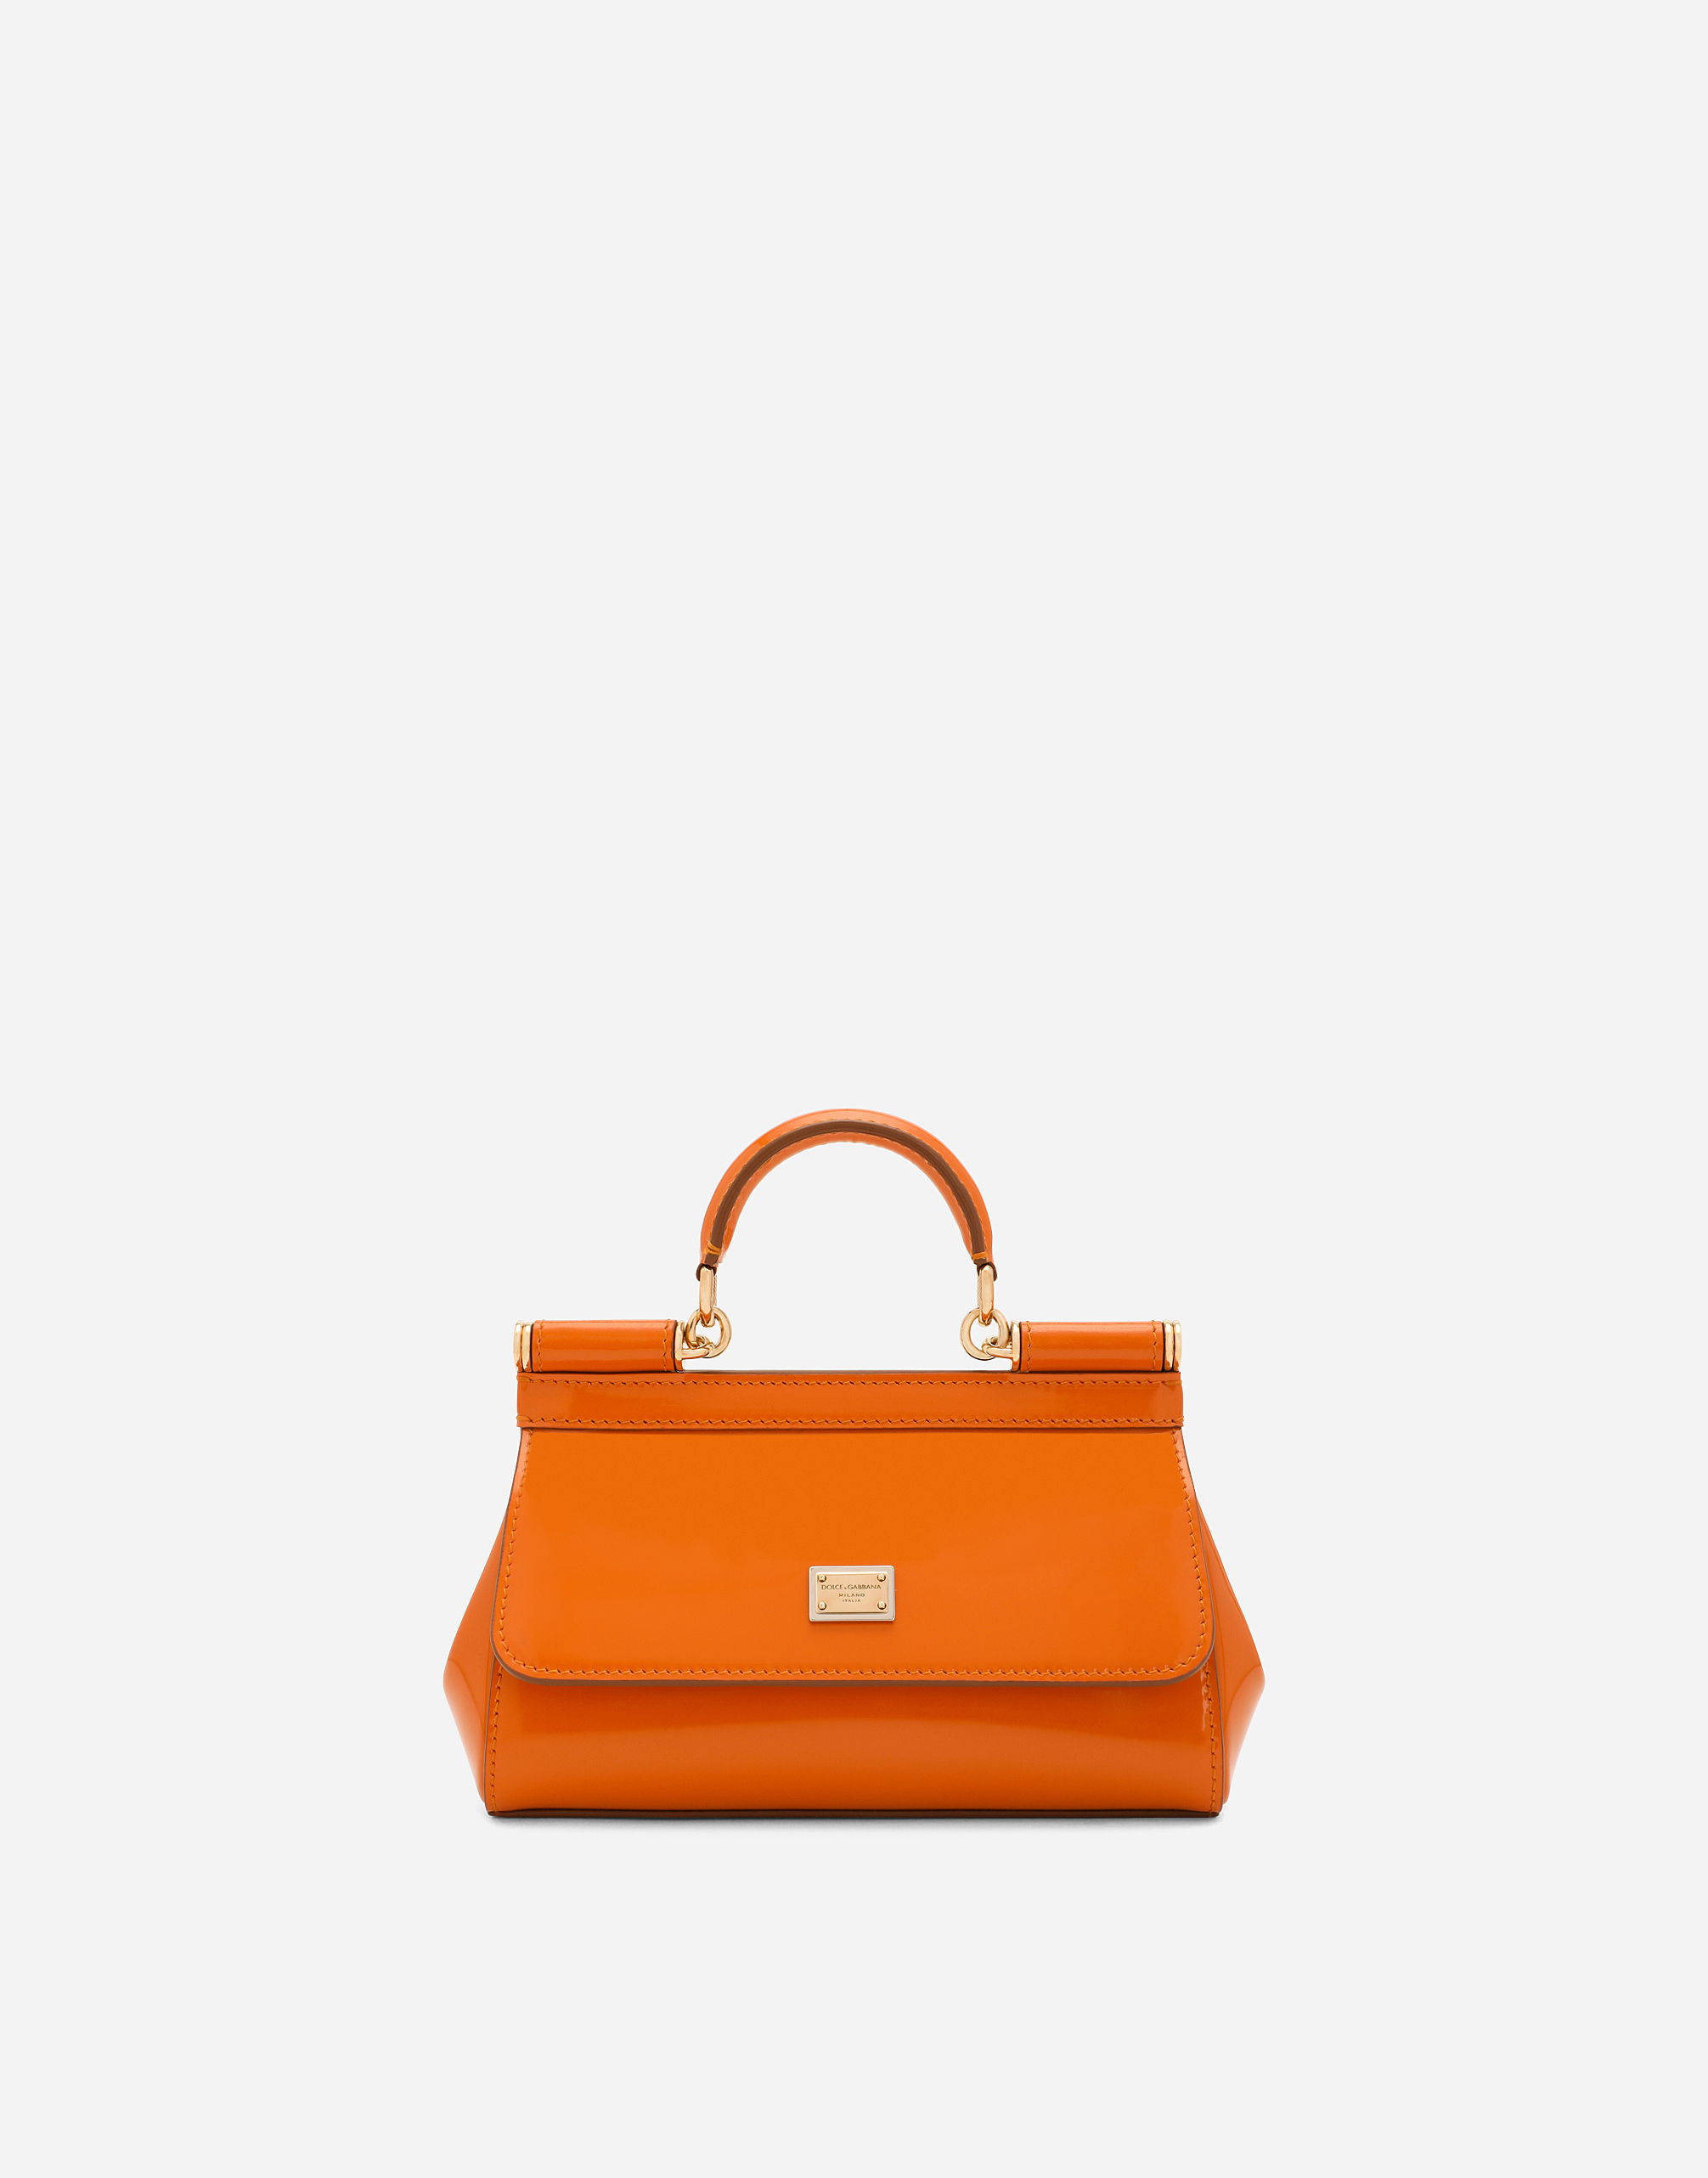 Small Sicily handbag in Orange